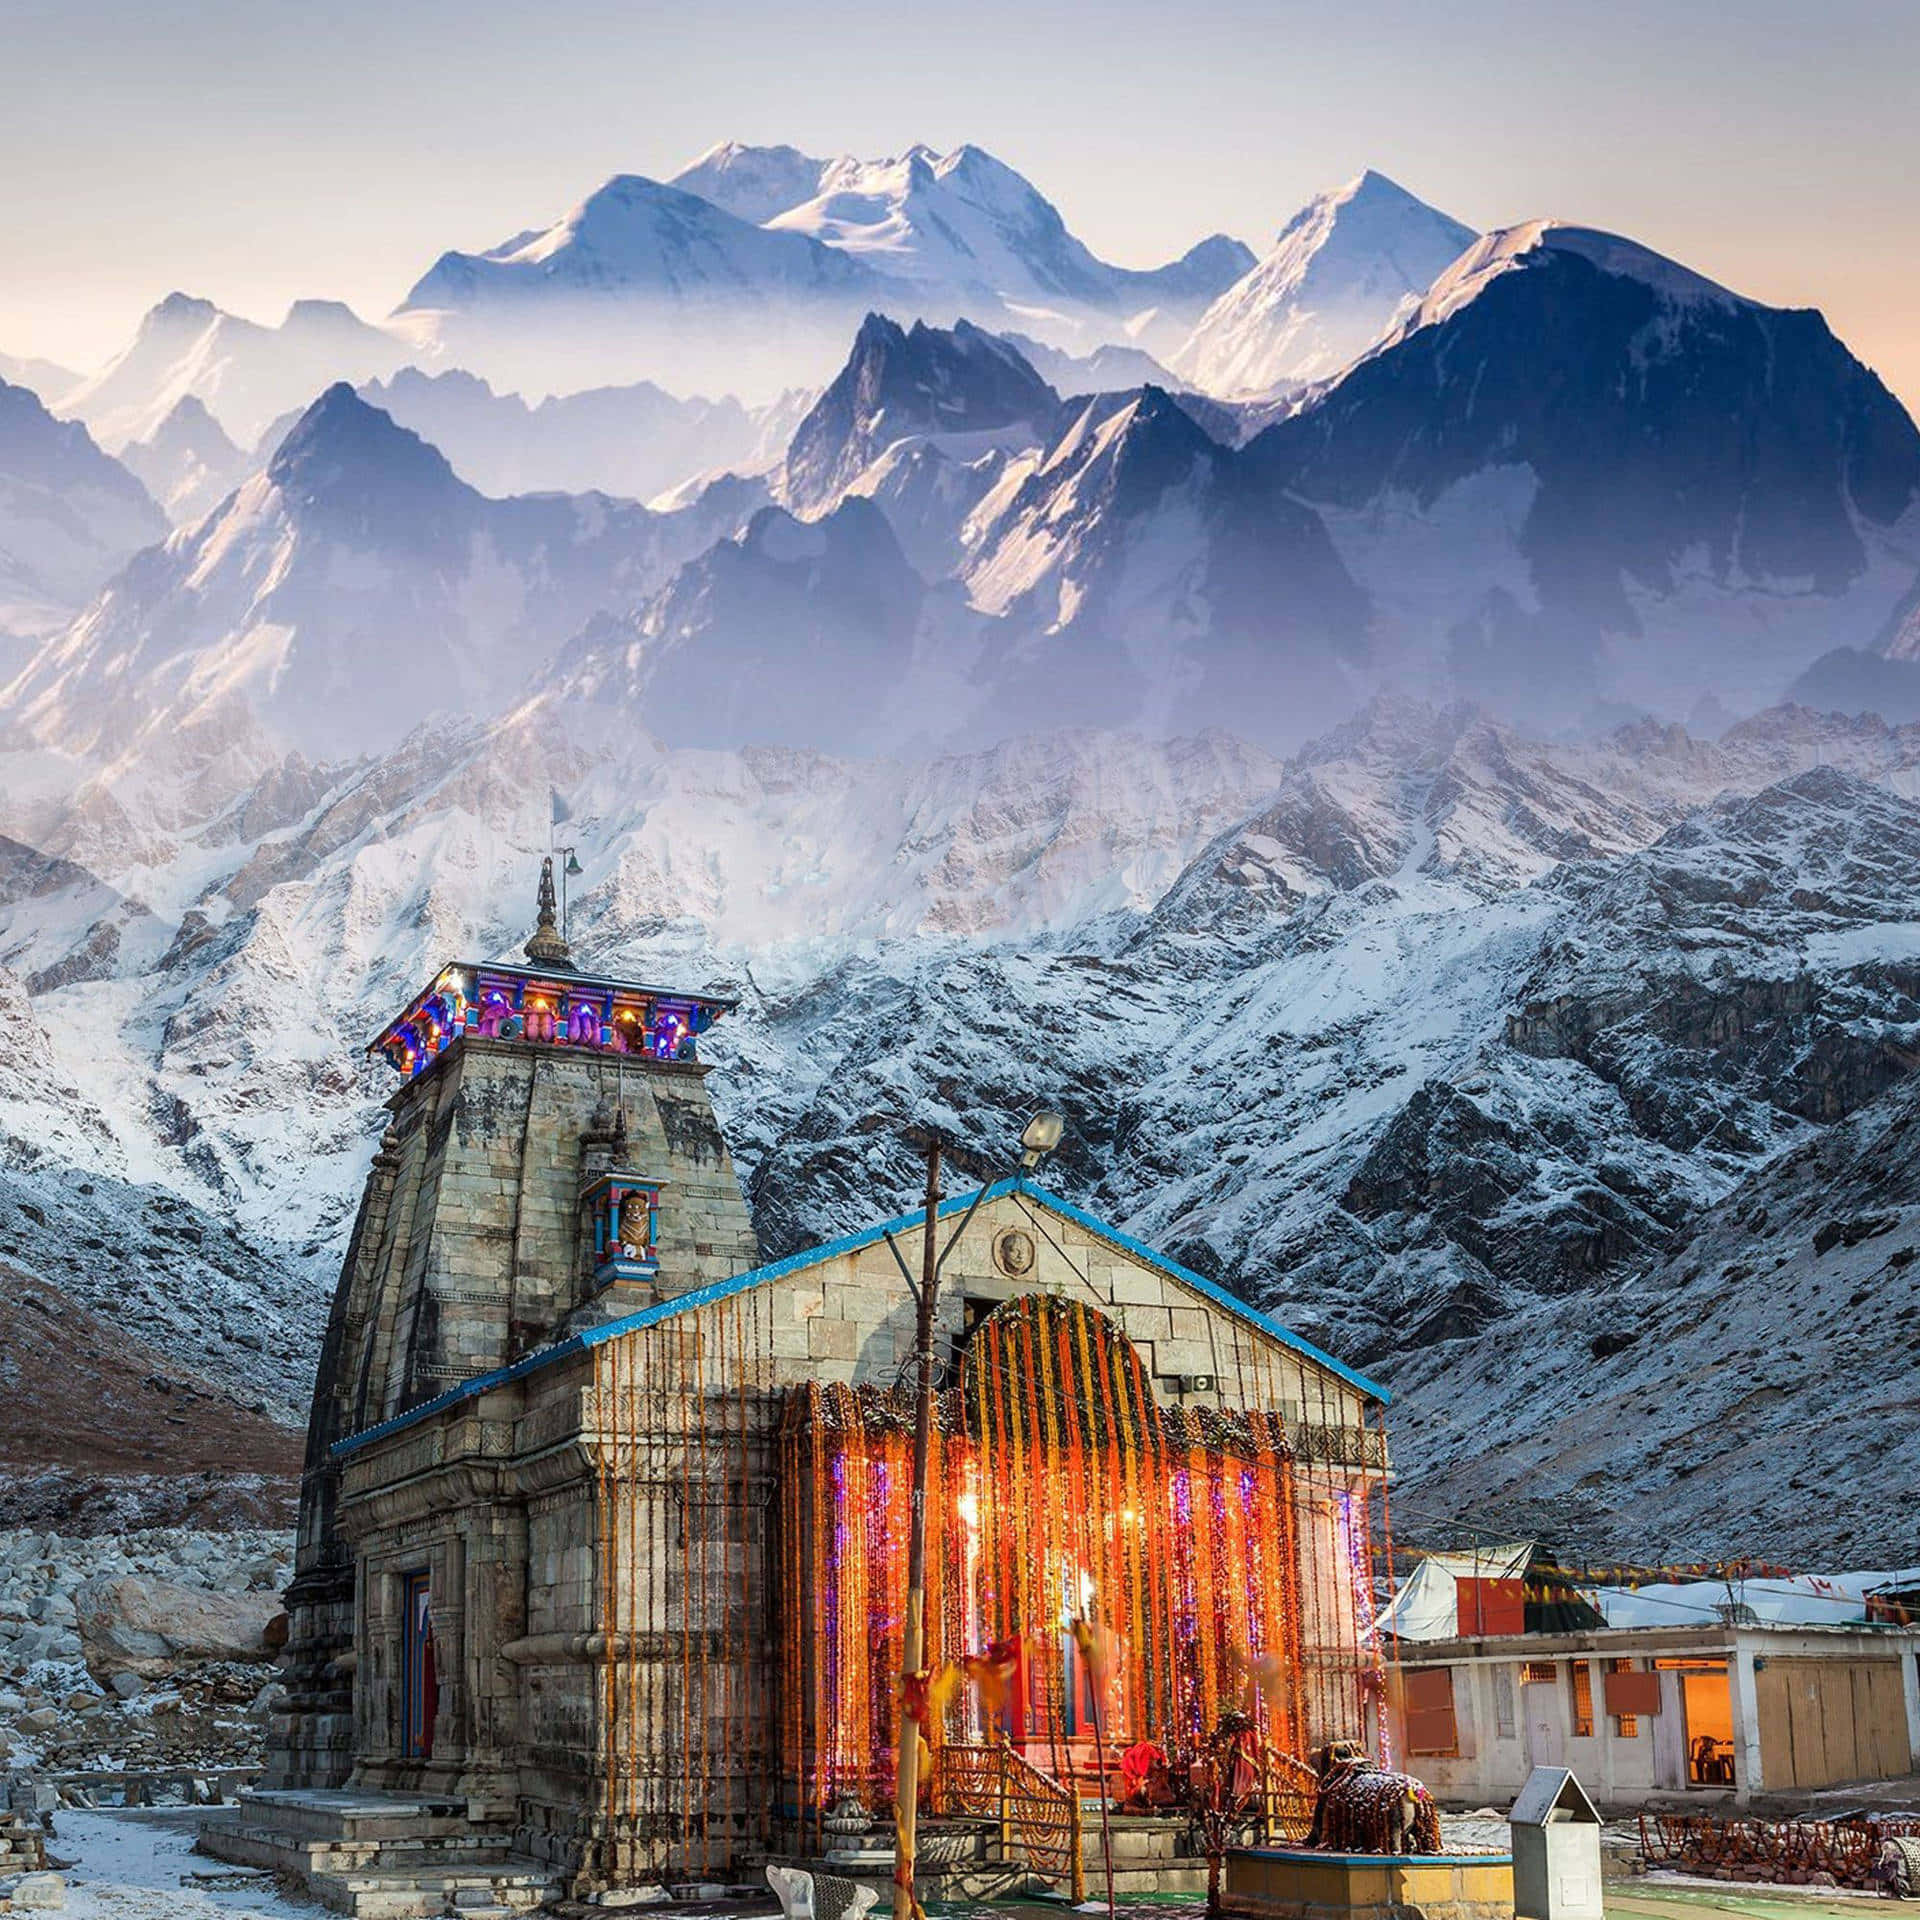 "Take a break and enjoy the stunning views of Kedarnath Valley"